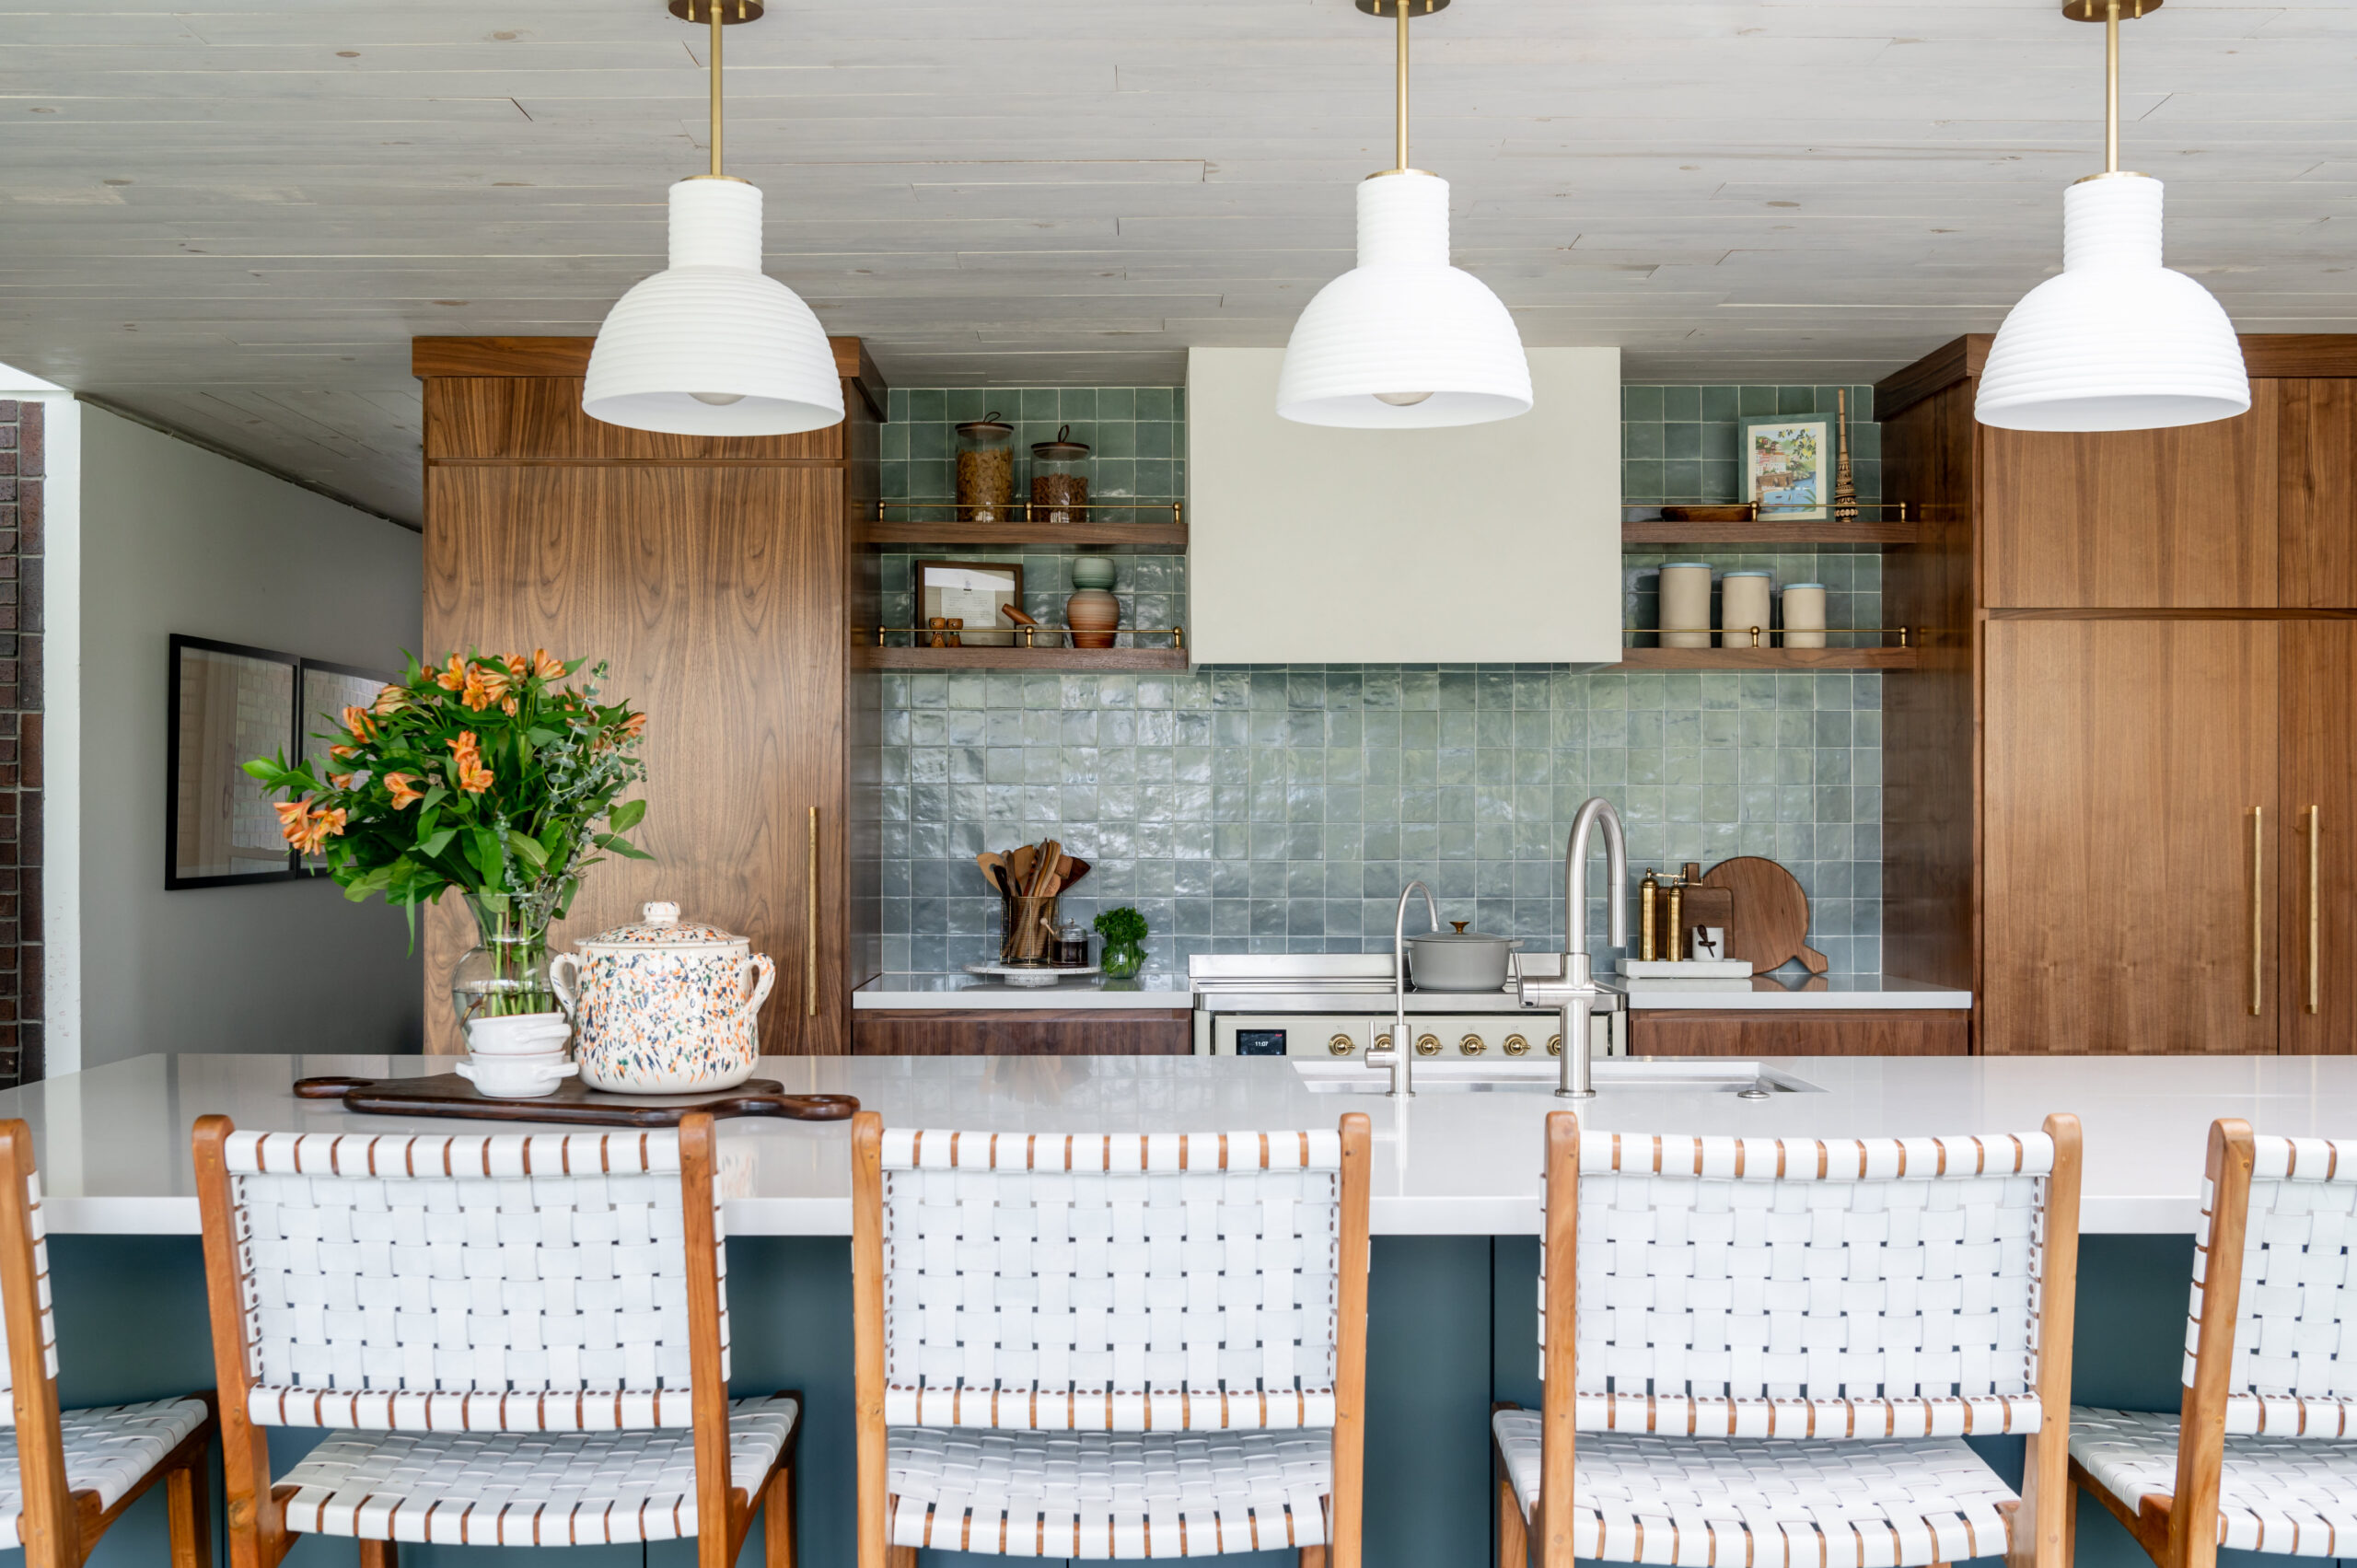 Midcentury kitchen interior design, with tile backsplash and wood cabinets